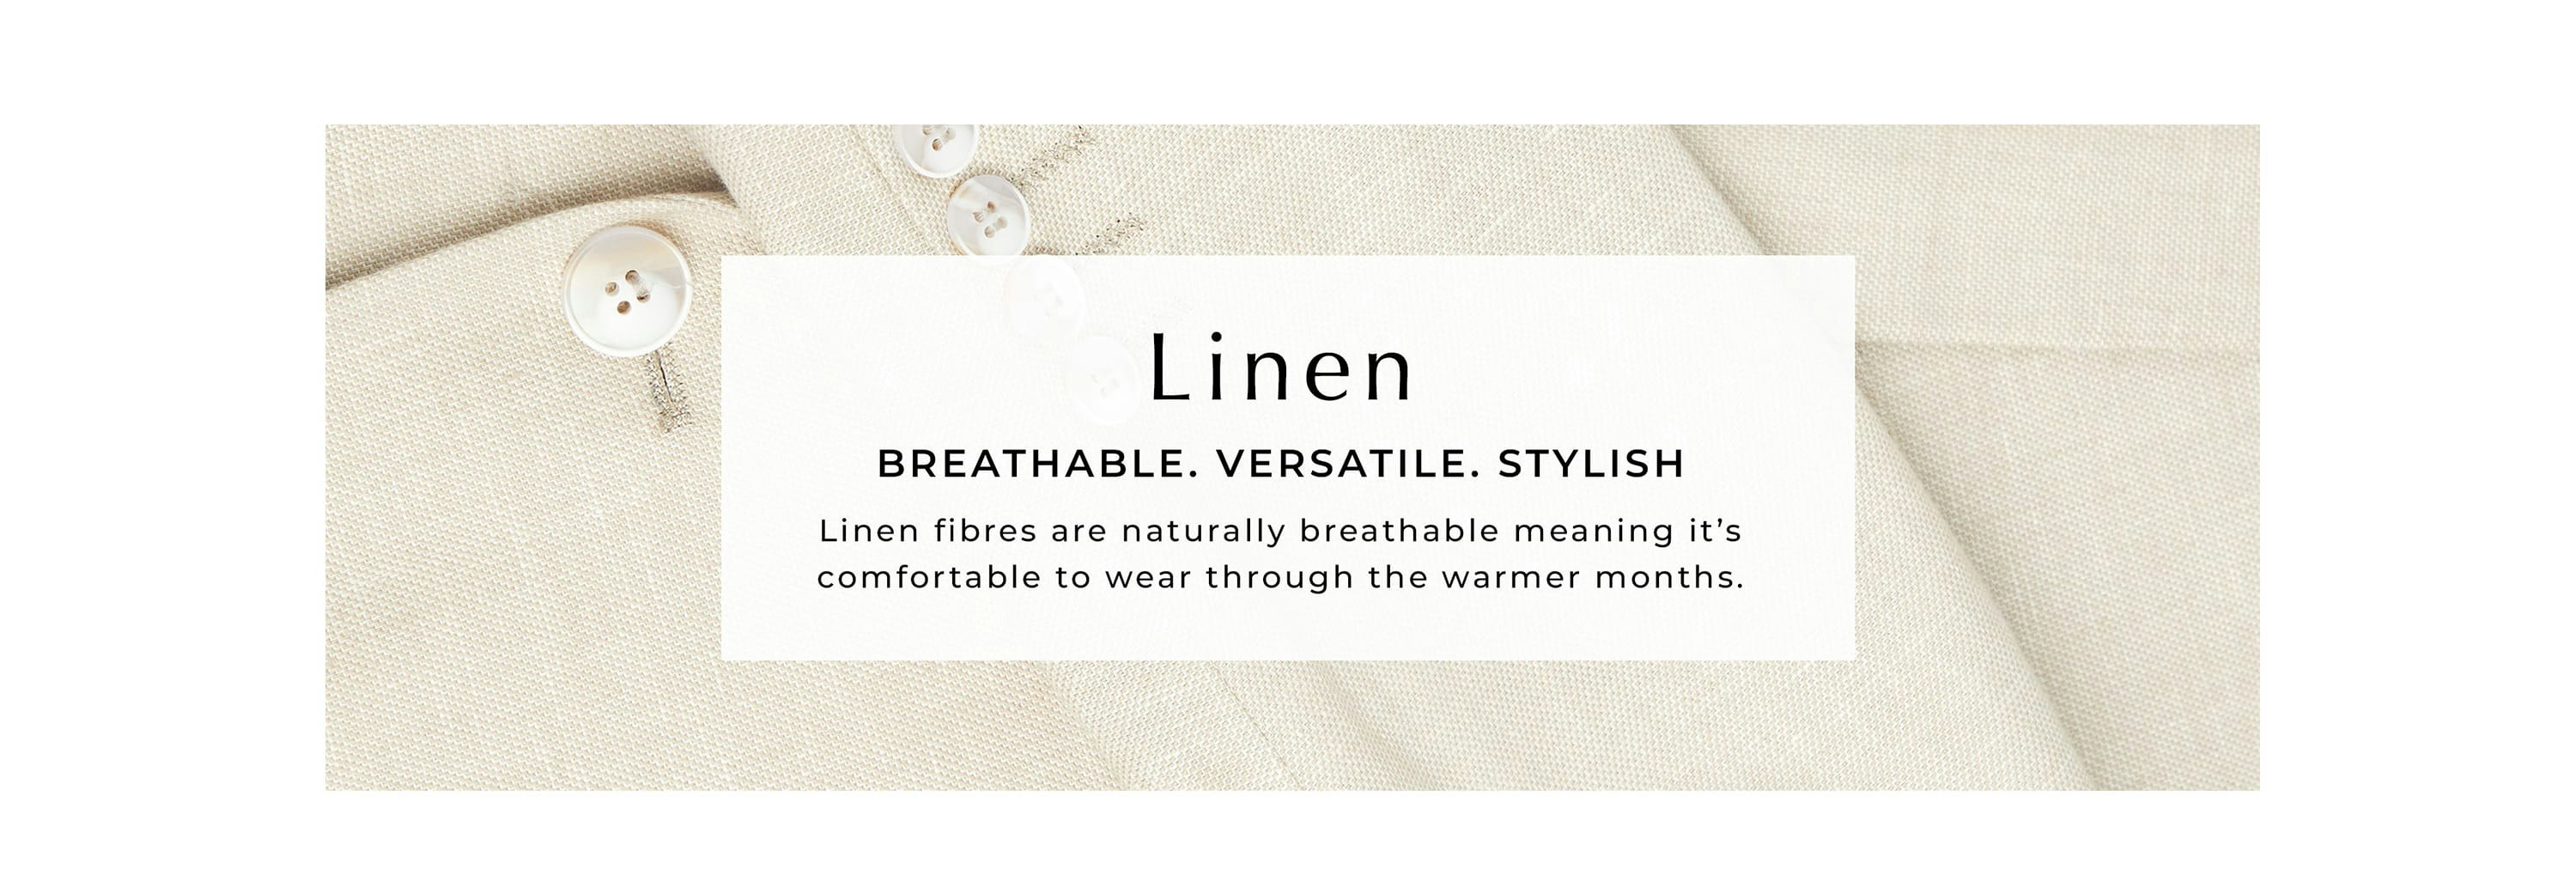 Linen Breathable Versatile Stylish